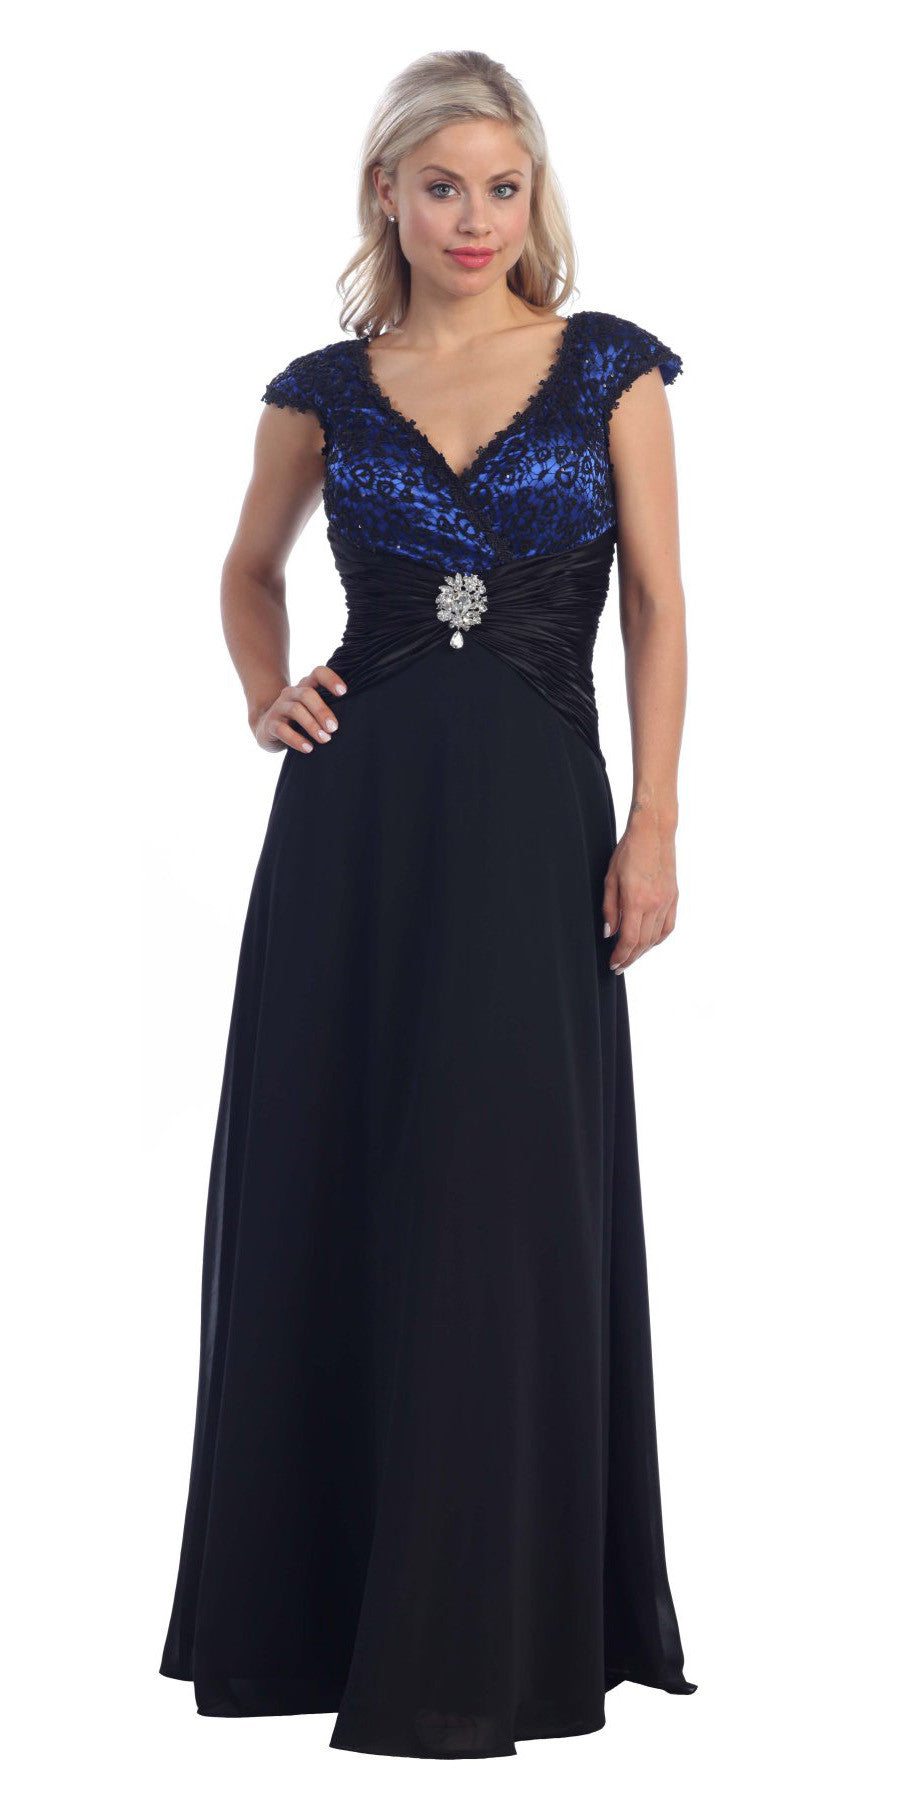 V Back/Neckline Royal Blue Dress Black Cap Sleeves Lace Overlay Gown ...